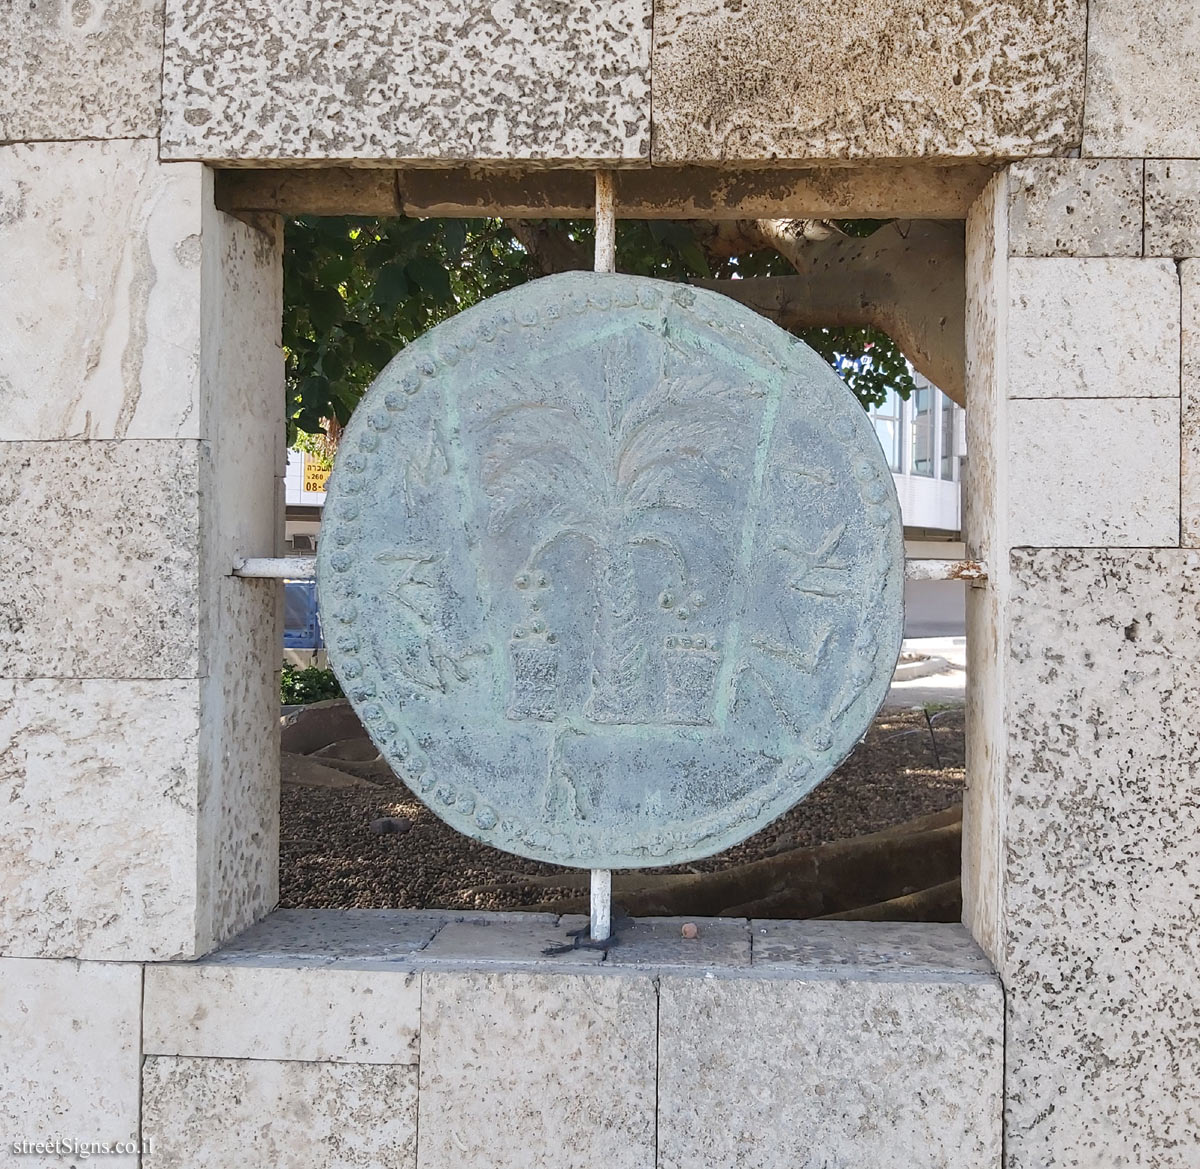 Yavne - The entrance sign to the city - HaYarmuch St 1, Yavne, Israel